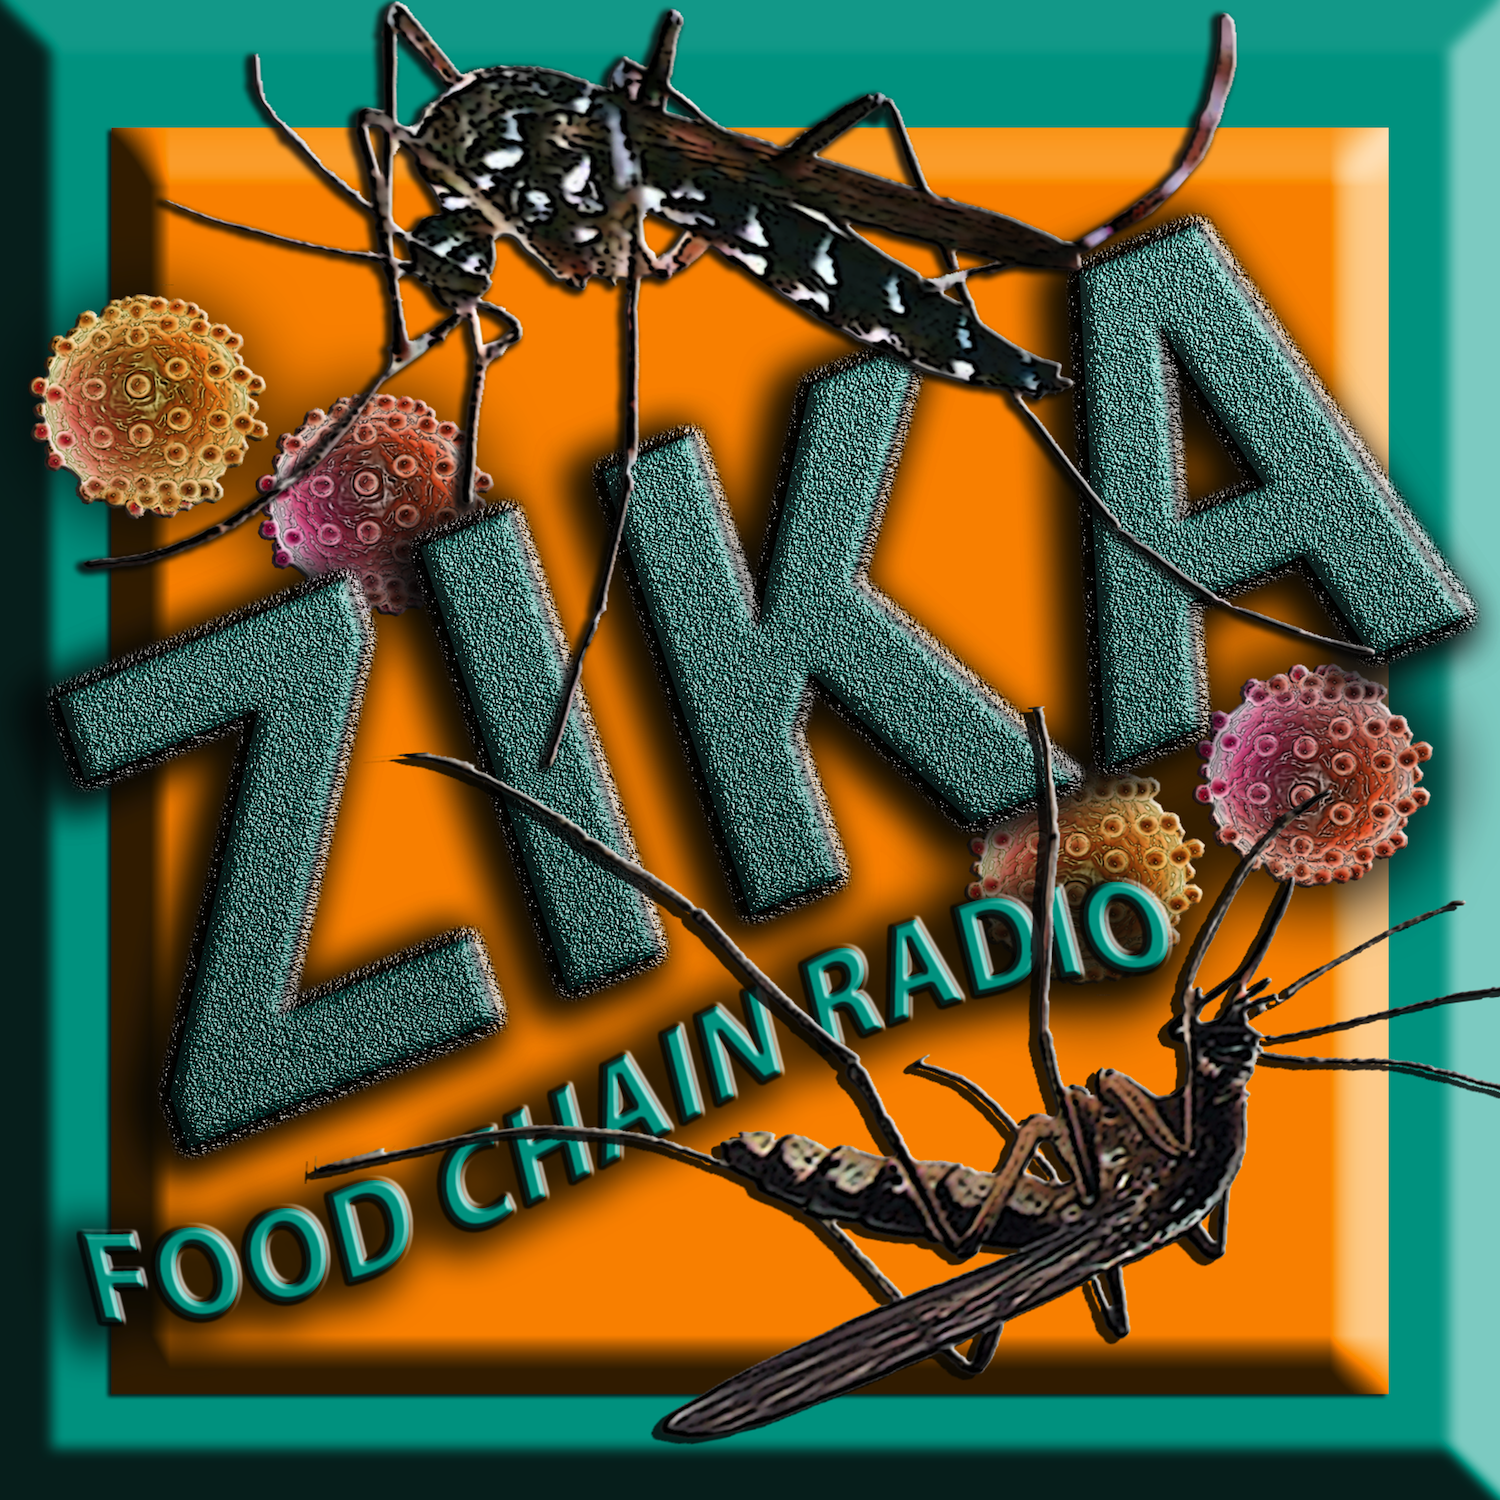 Michael Olson Food Chain Radio – Zika Virus